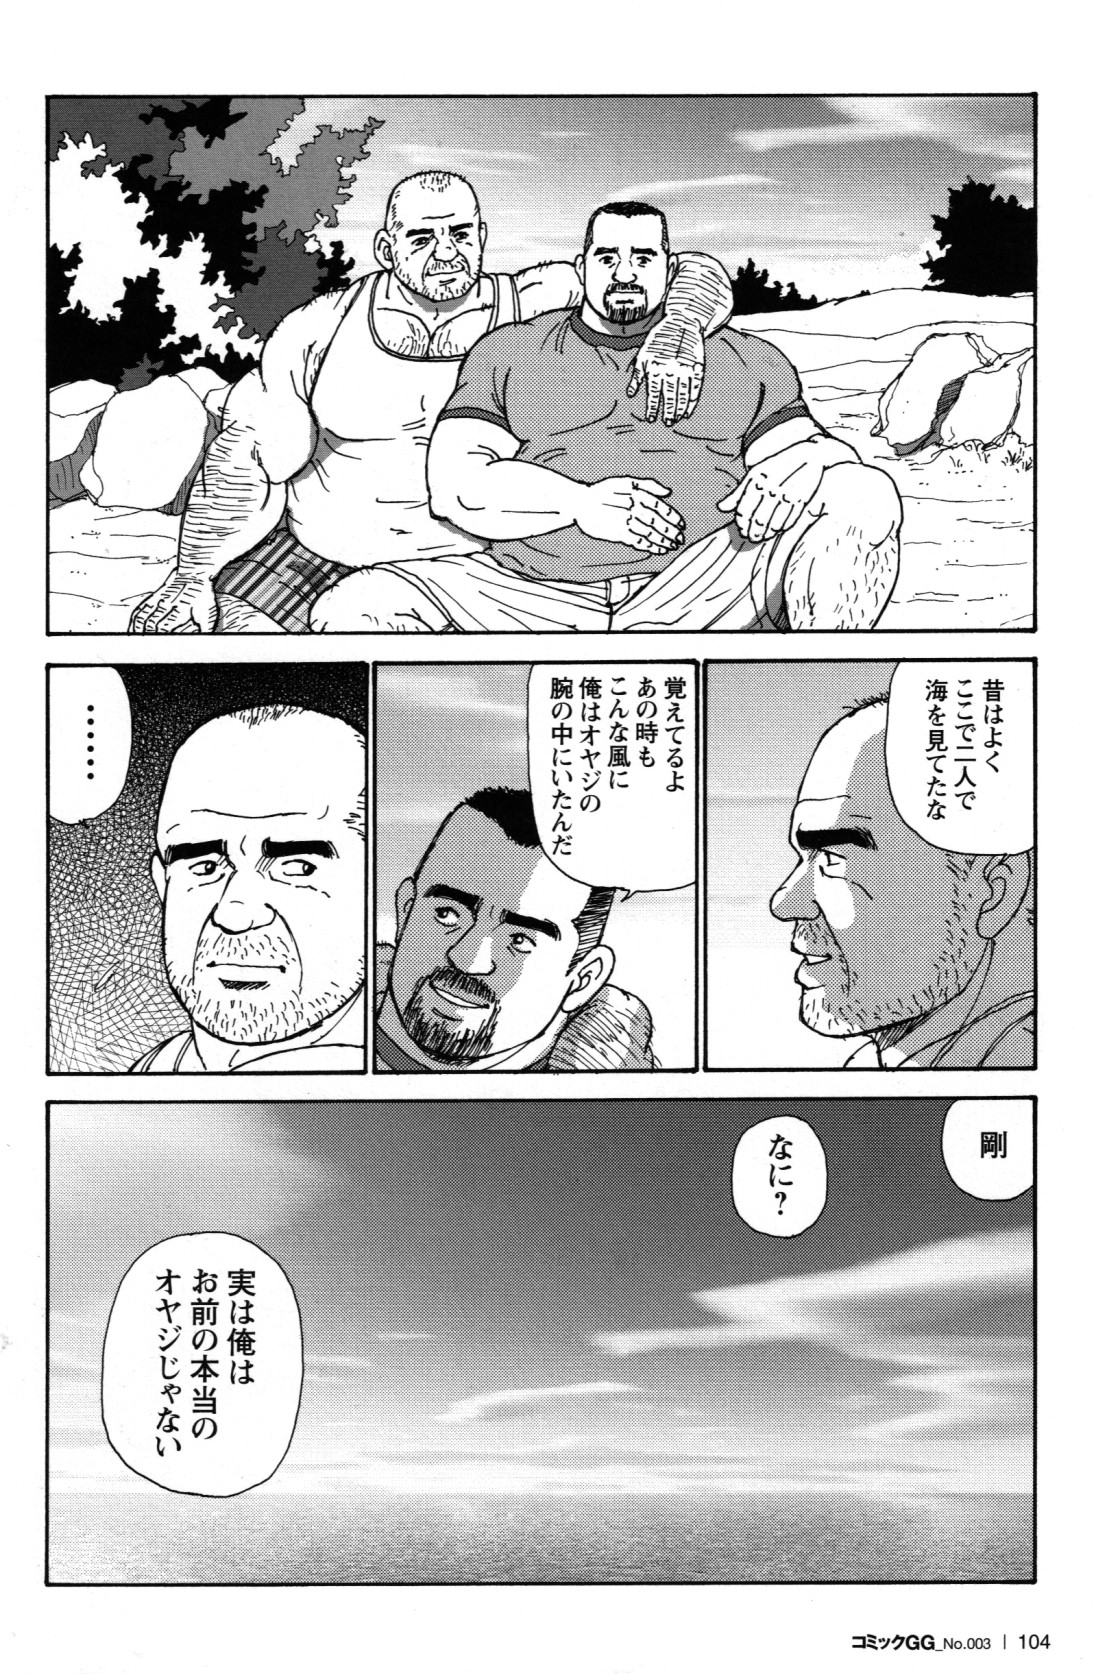 Comic G-men Gaho No.03 